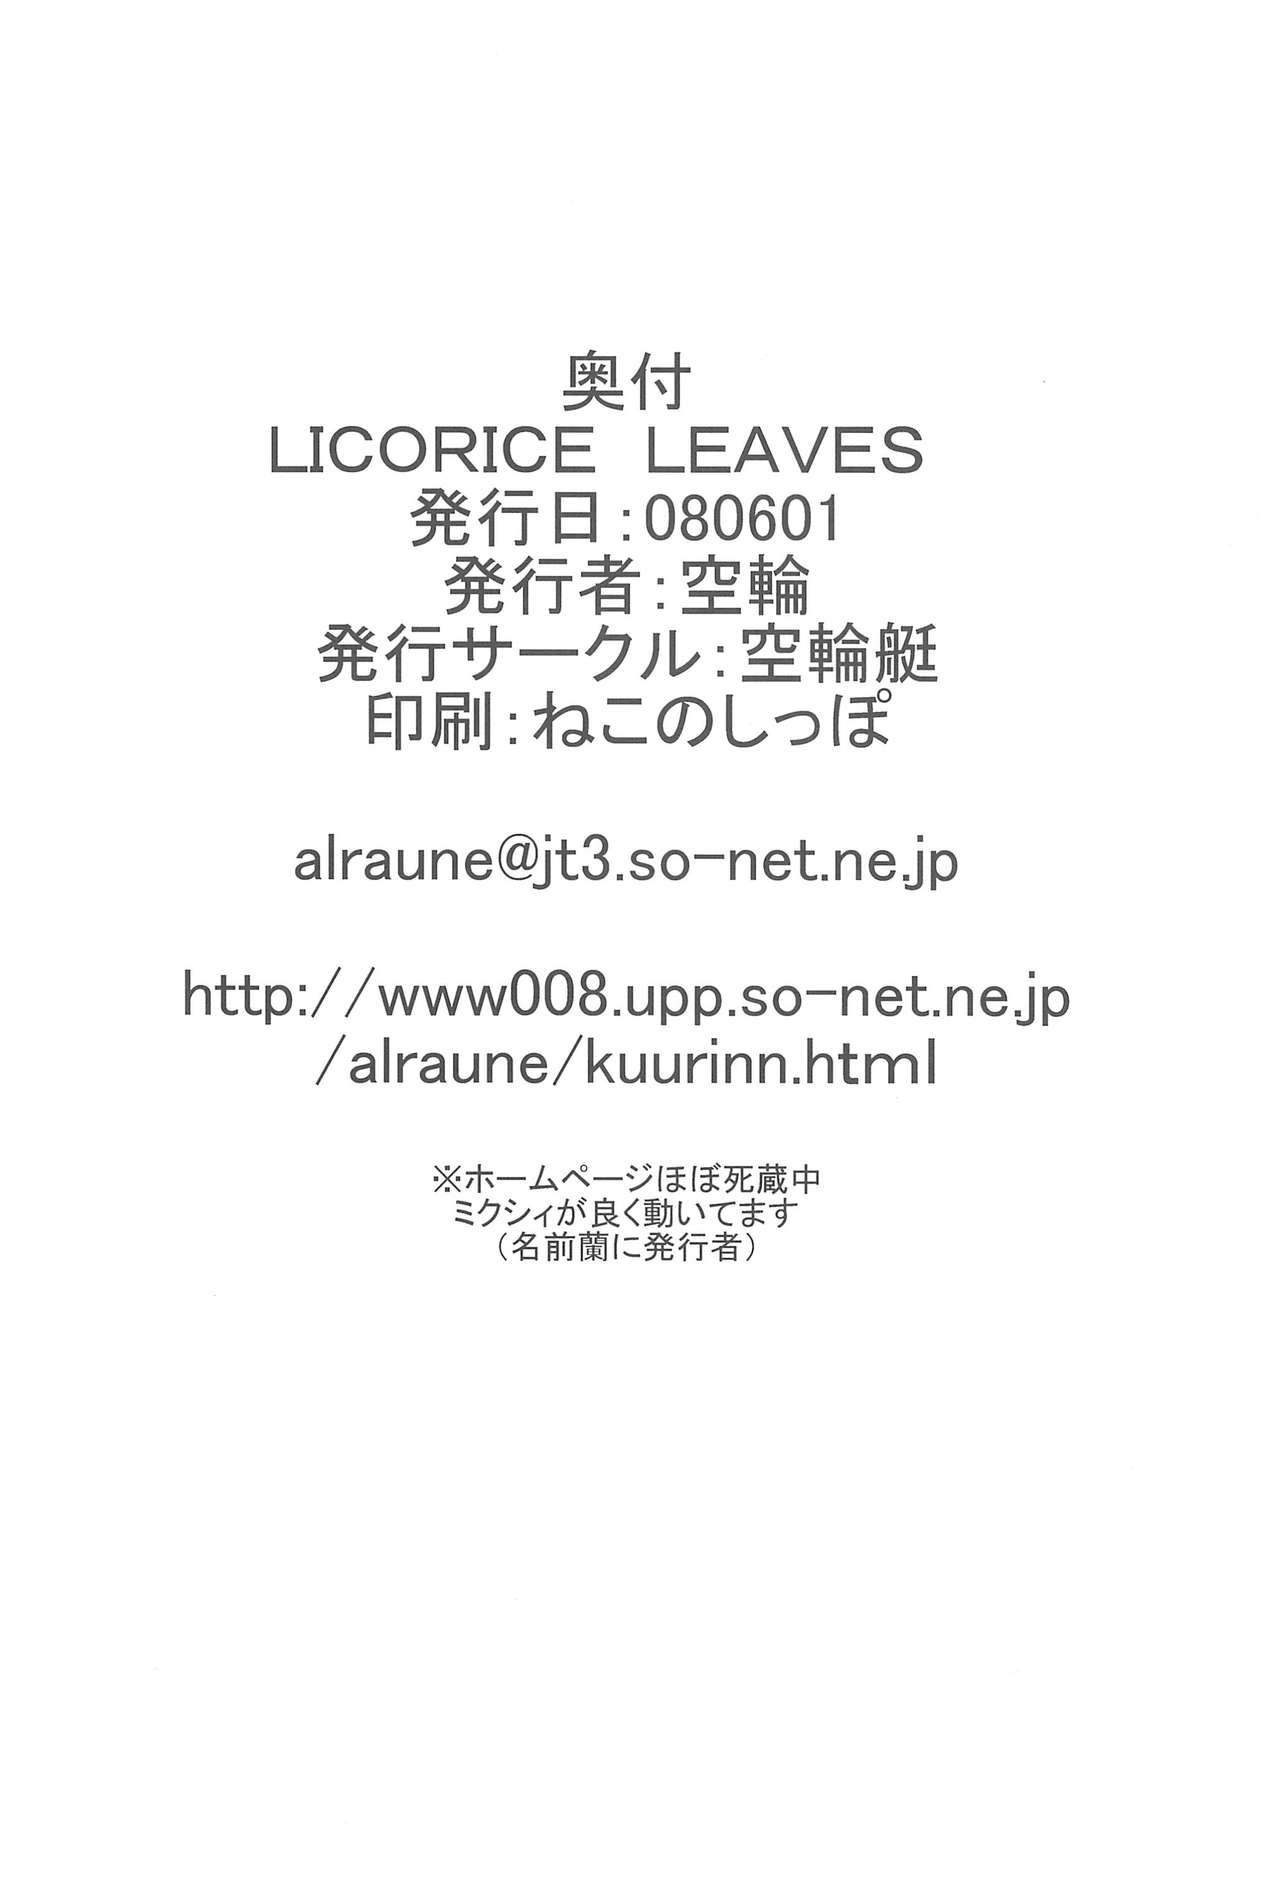 LICORICE LEAVES 23